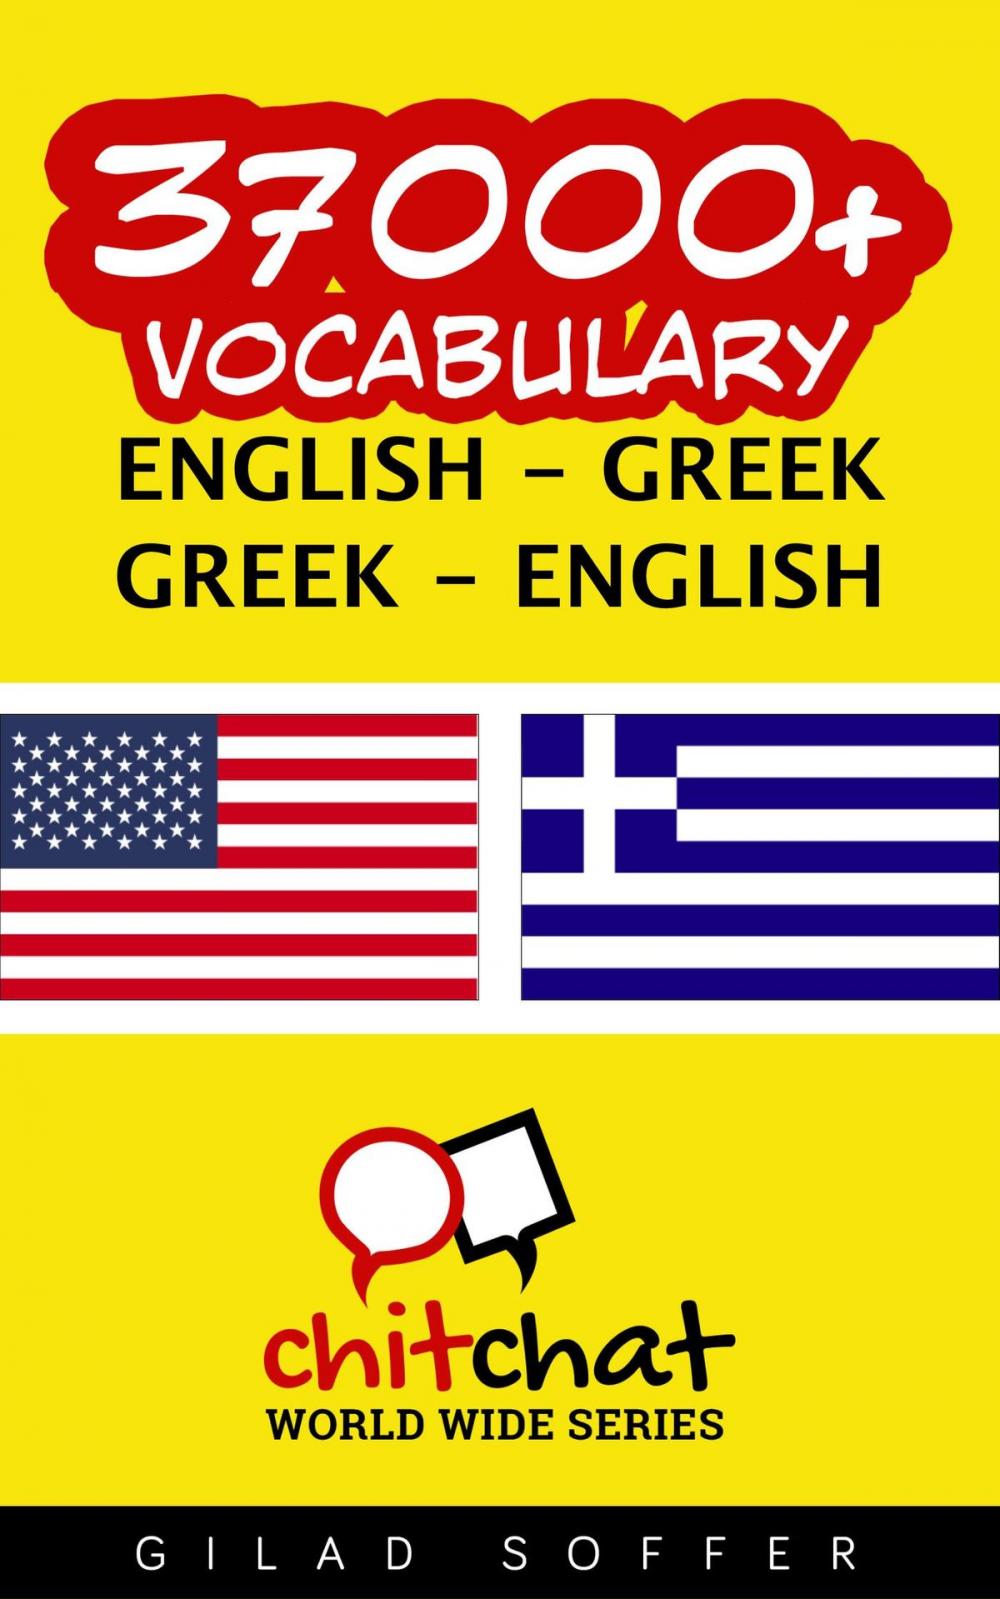 Big bigCover of 37000+ Vocabulary English - Greek